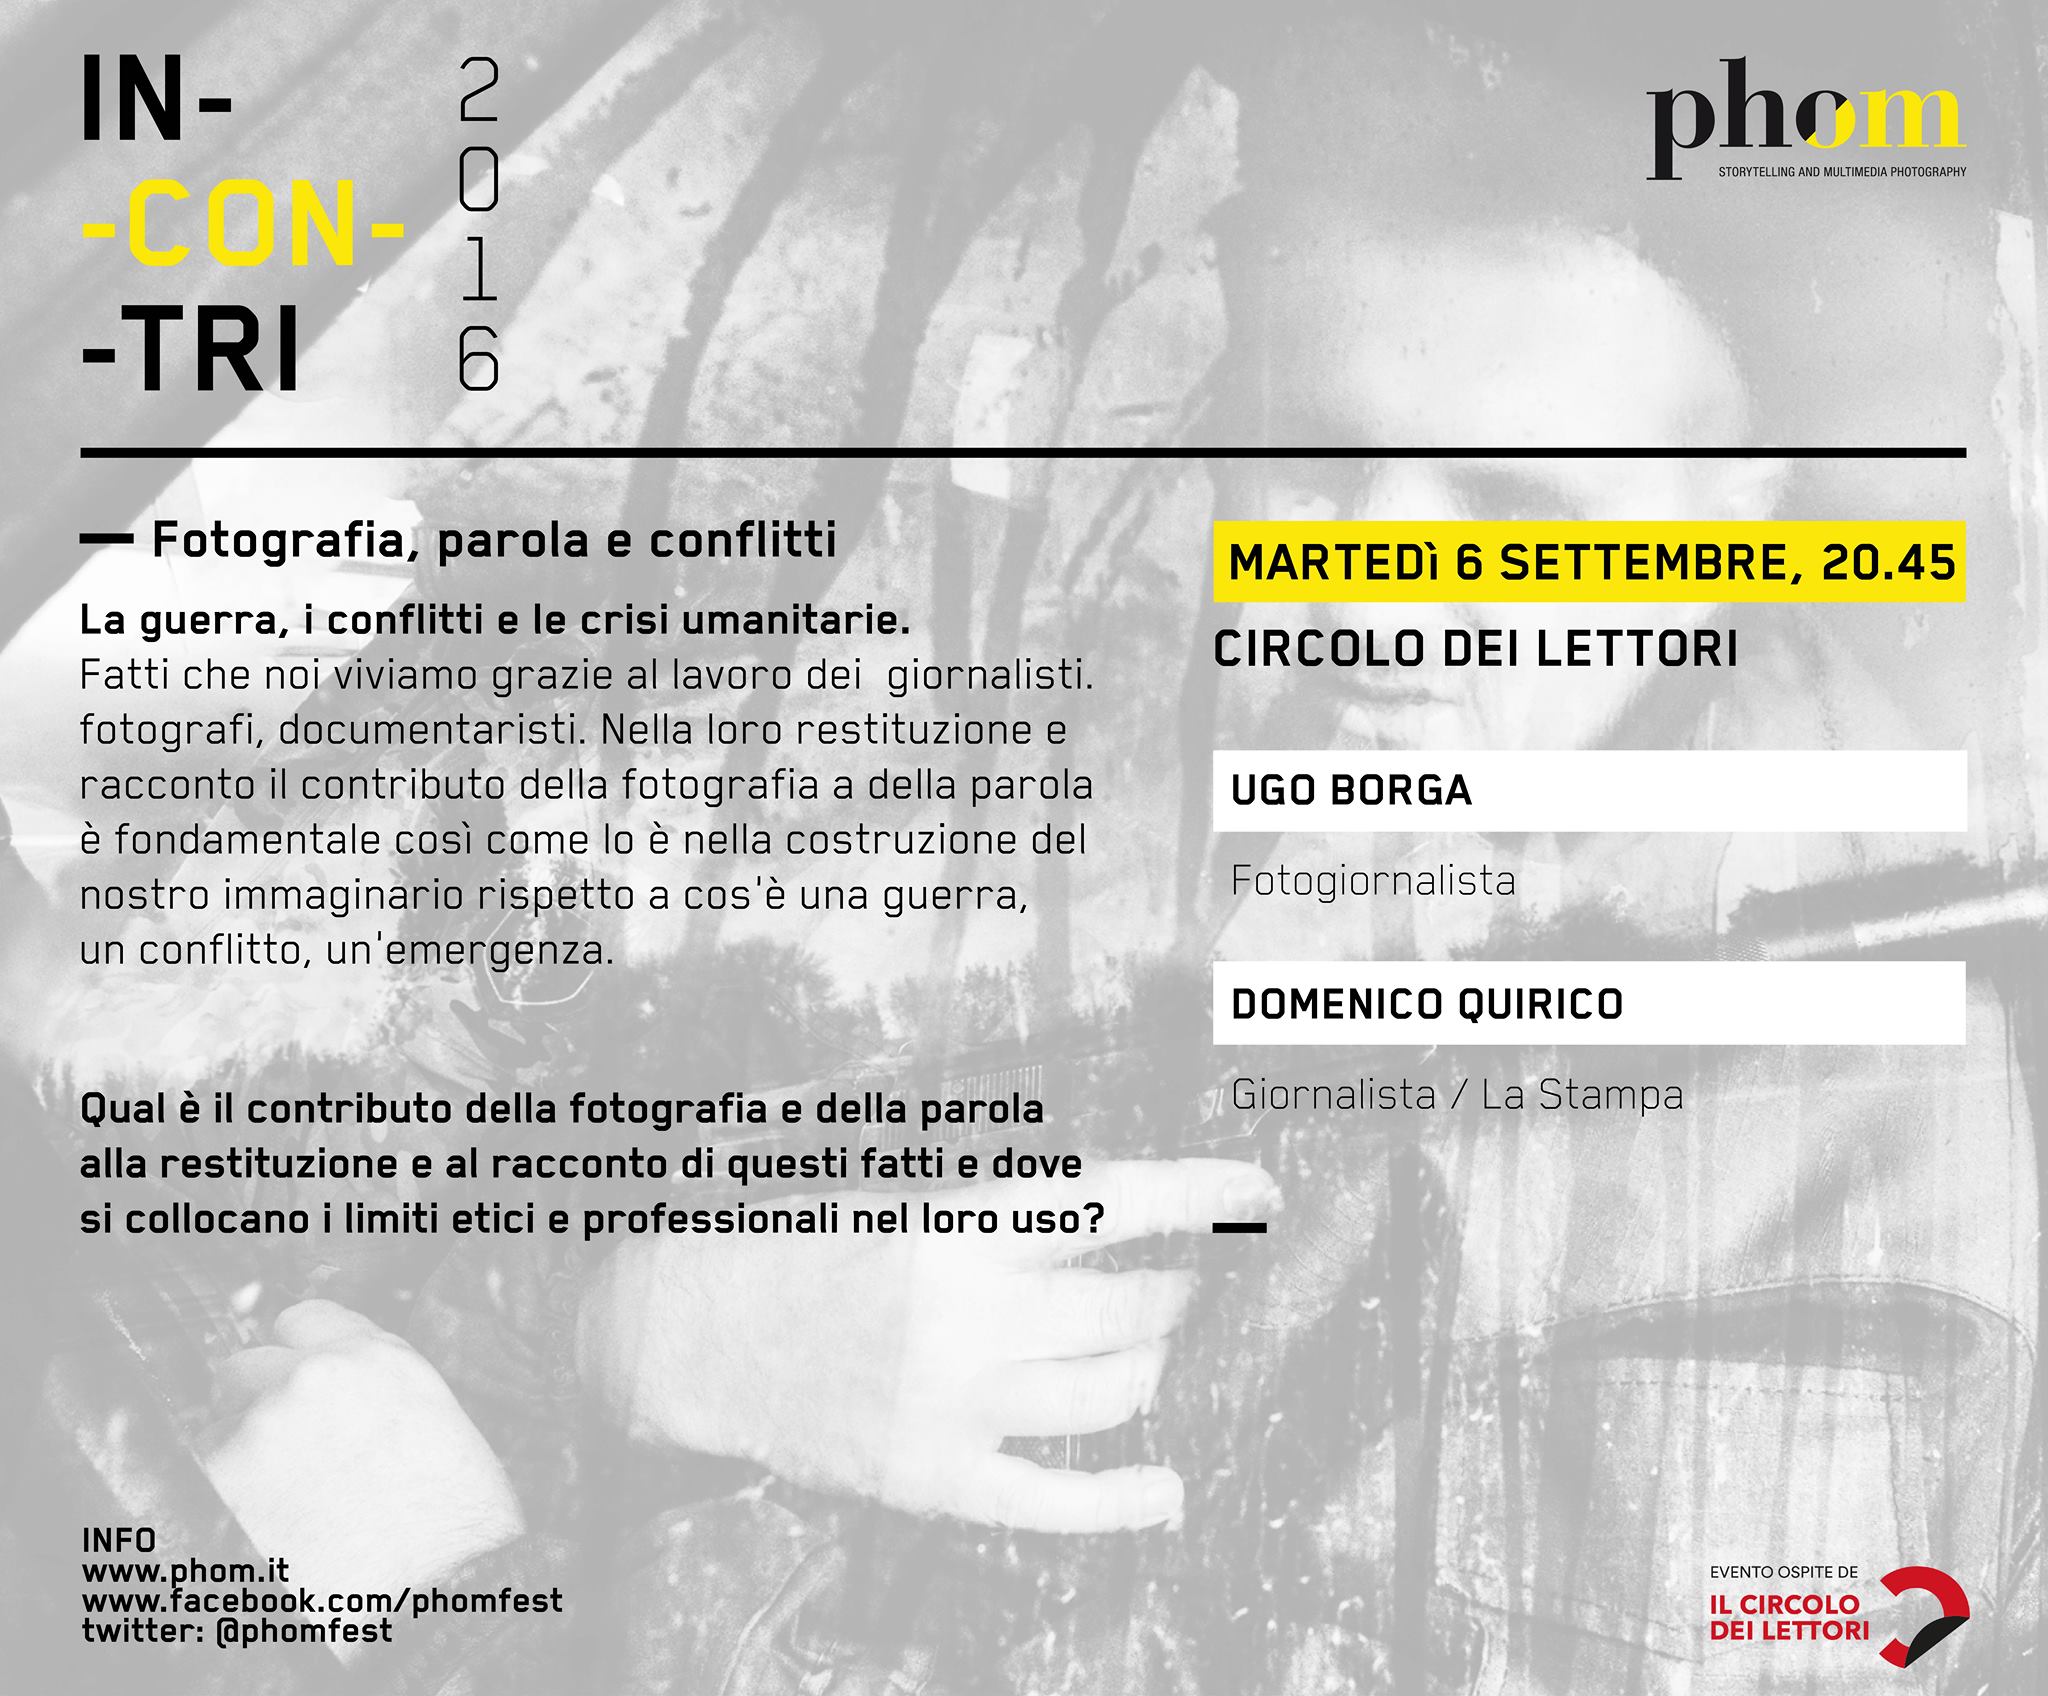 Phom Incontri - Torino